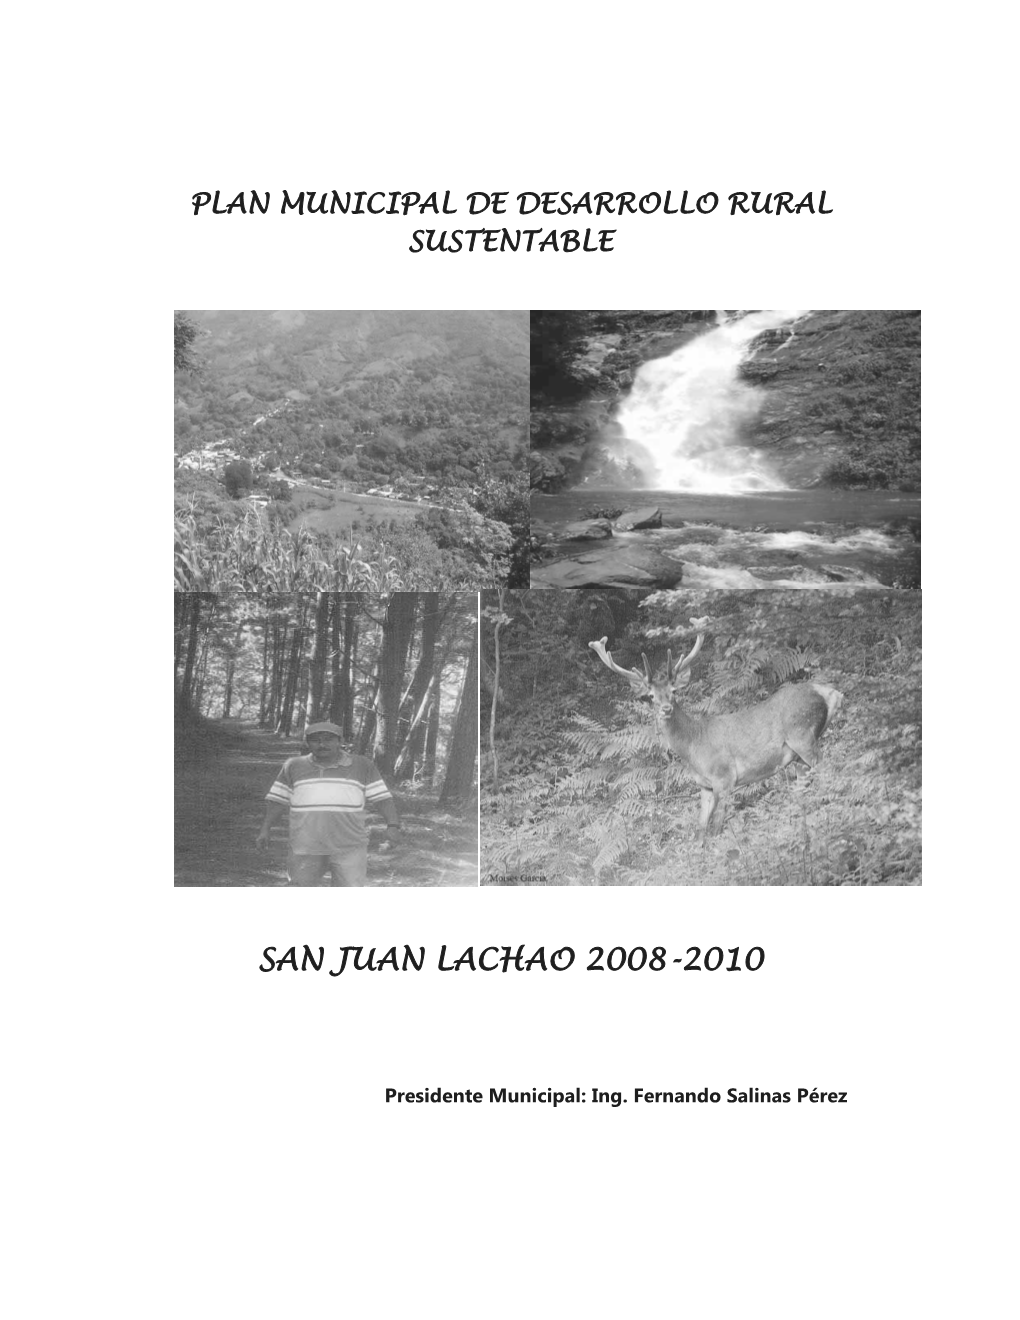 San Juan Lachao 2008-2010